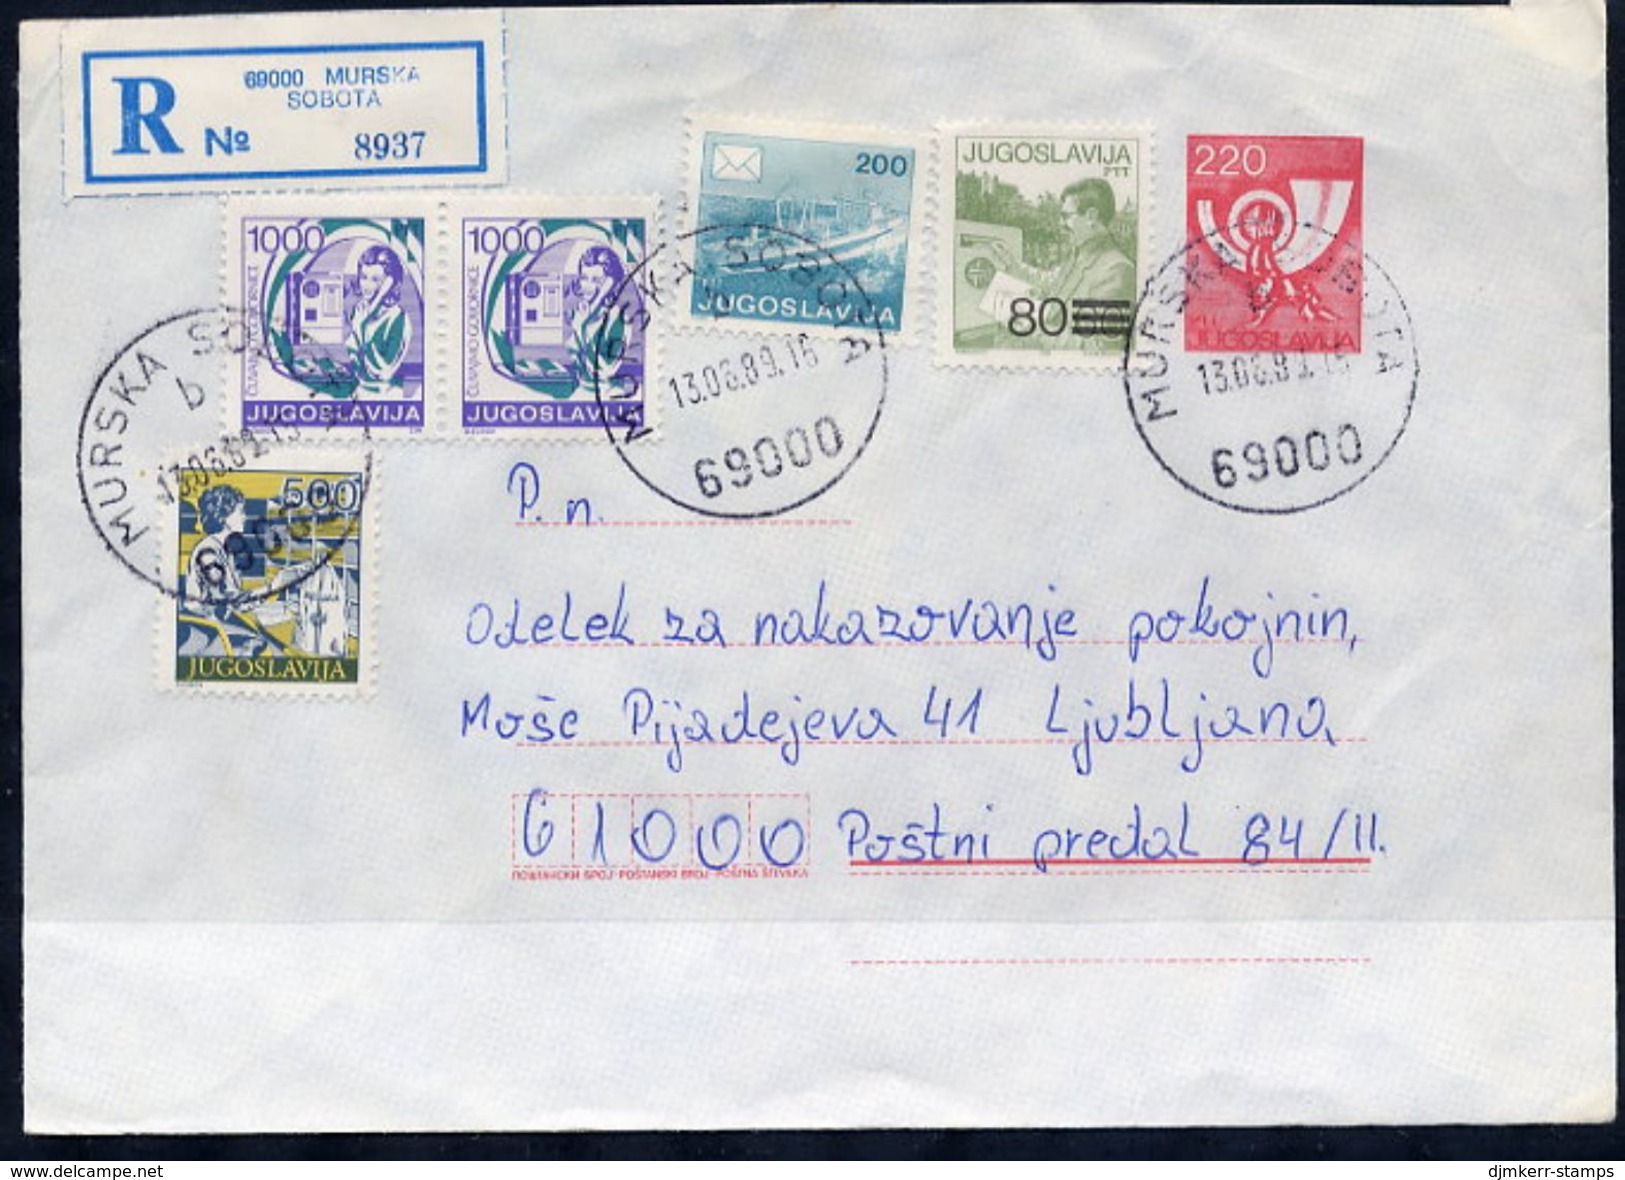 YUGOSLAVIA 1988 Posthorn 220 D. Registered Stationery Envelope Used With Additional Franking.  Michel U83 - Interi Postali